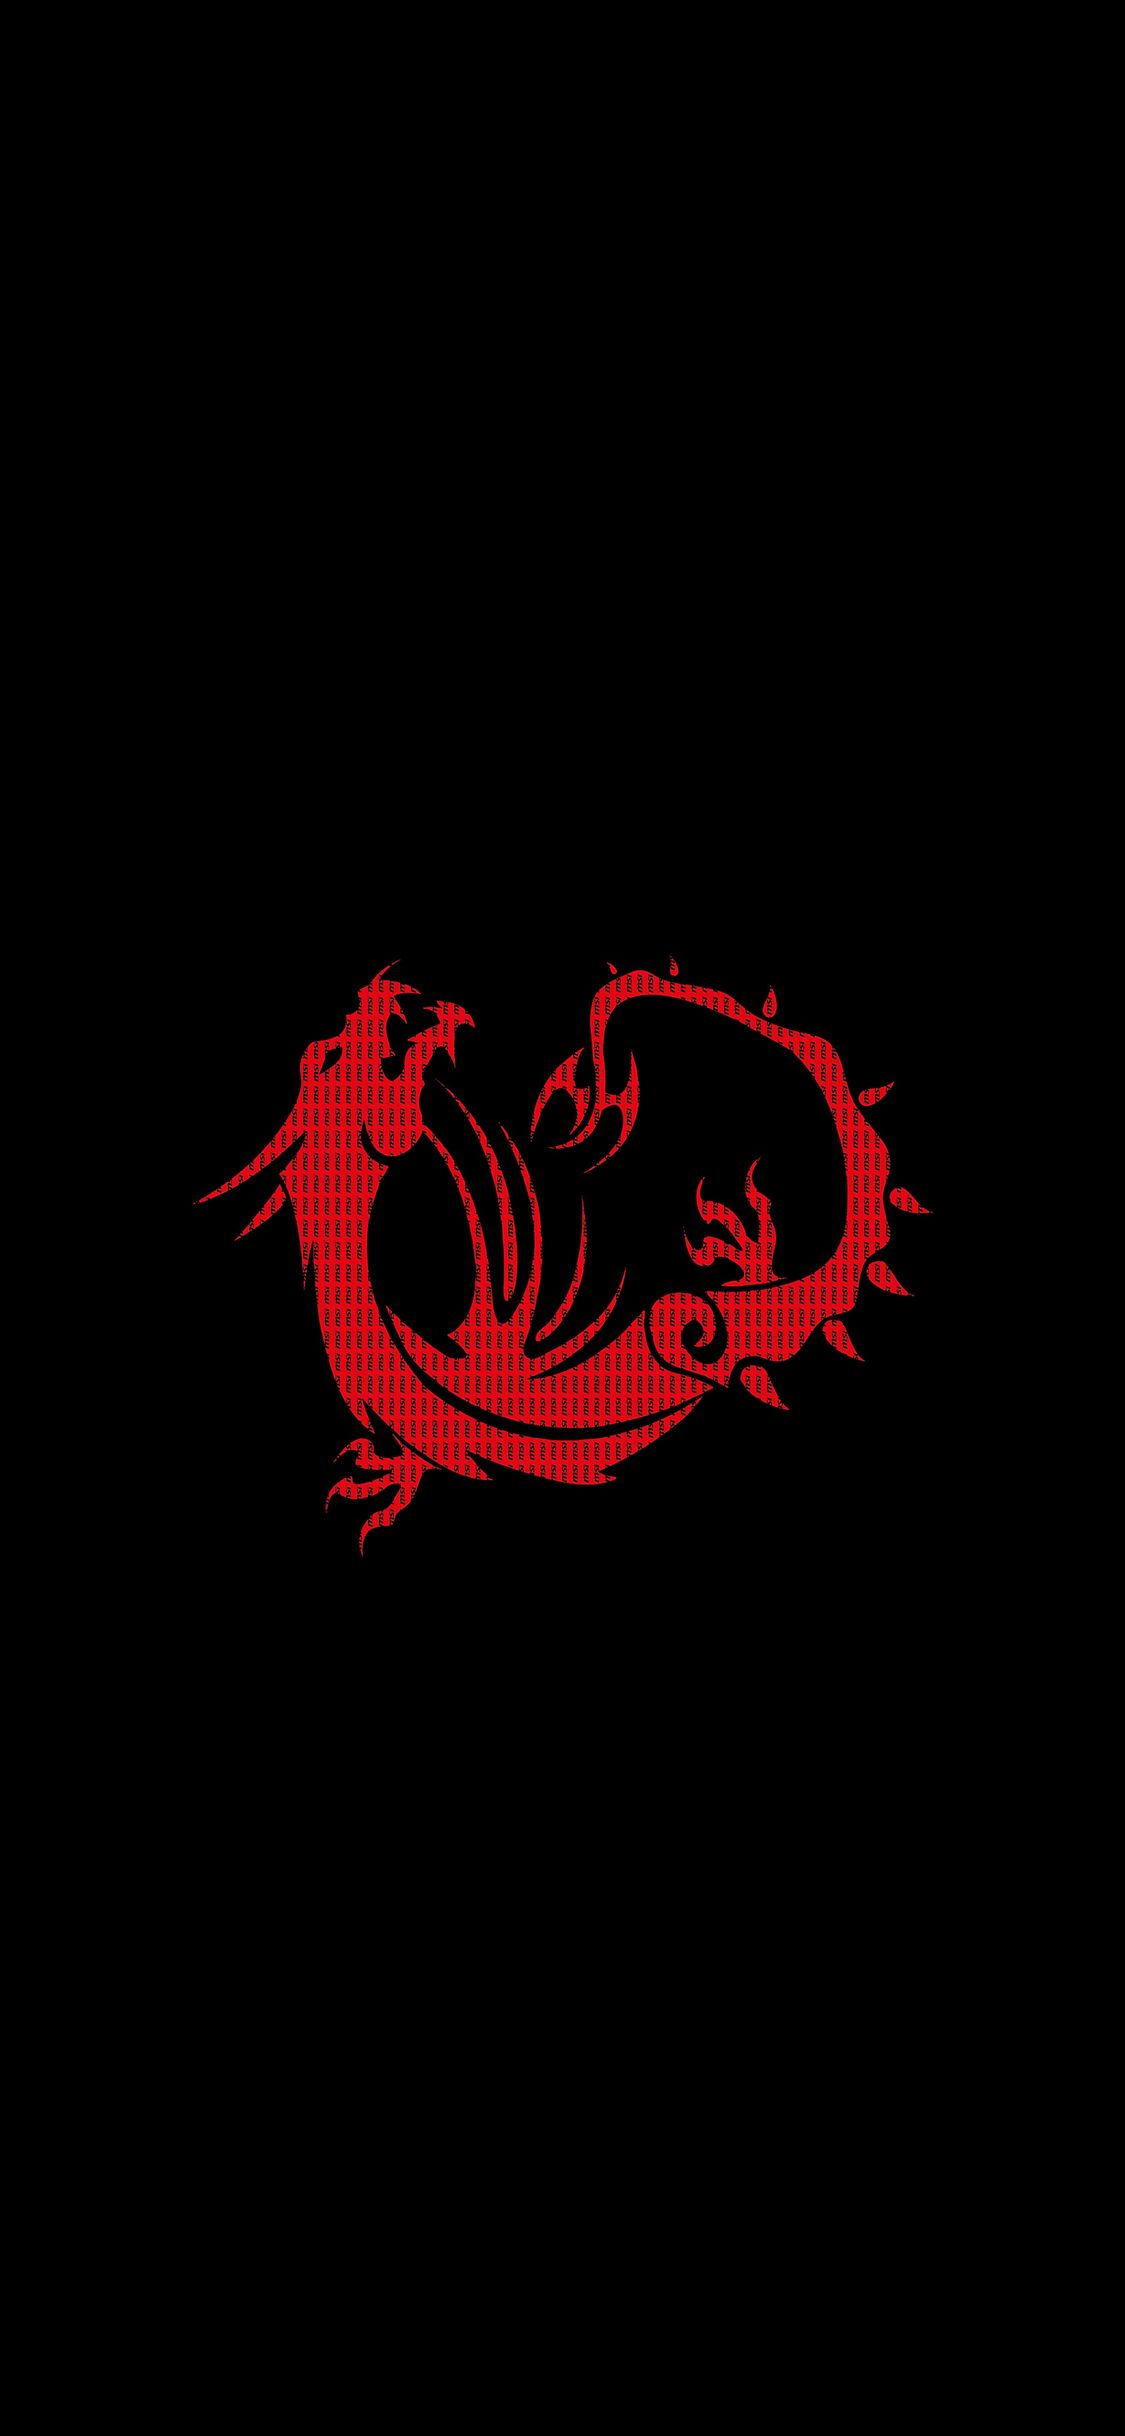 Red Dragon Black Minimal 4k iPhone XS, iPhone iPhone X